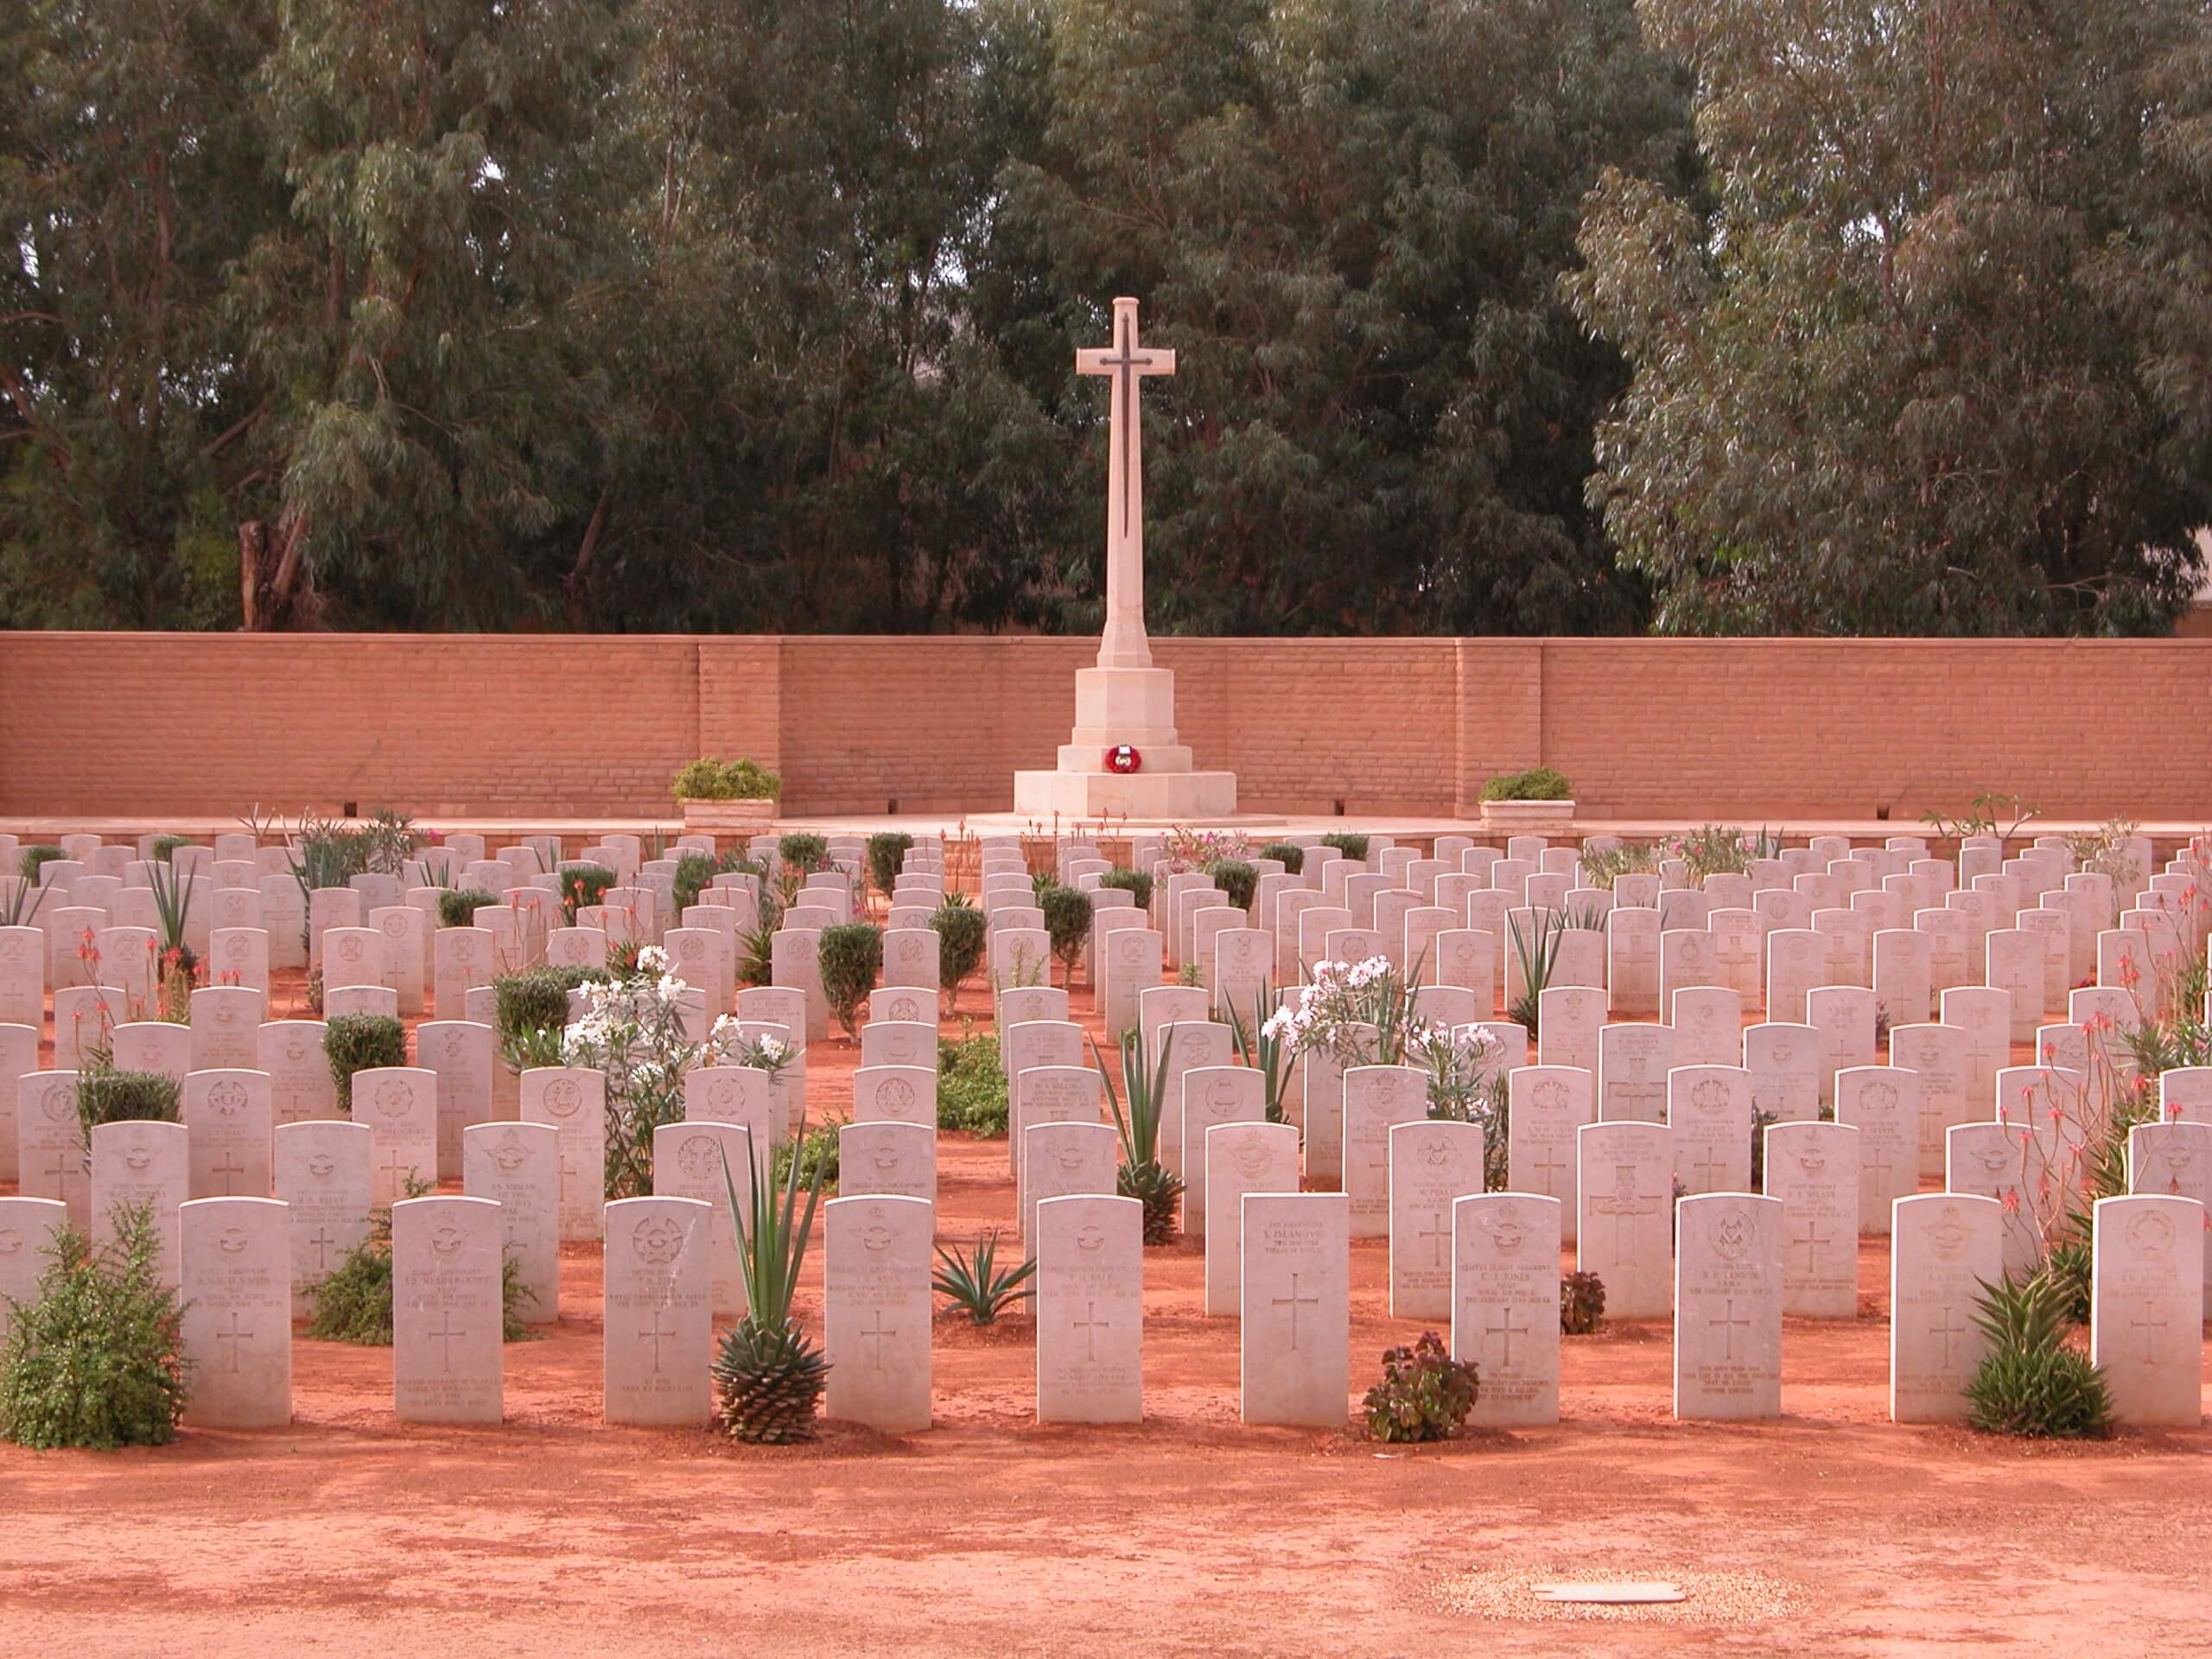 Headstones and cross of sacrifice in Benghazi War Cemetery, Libya